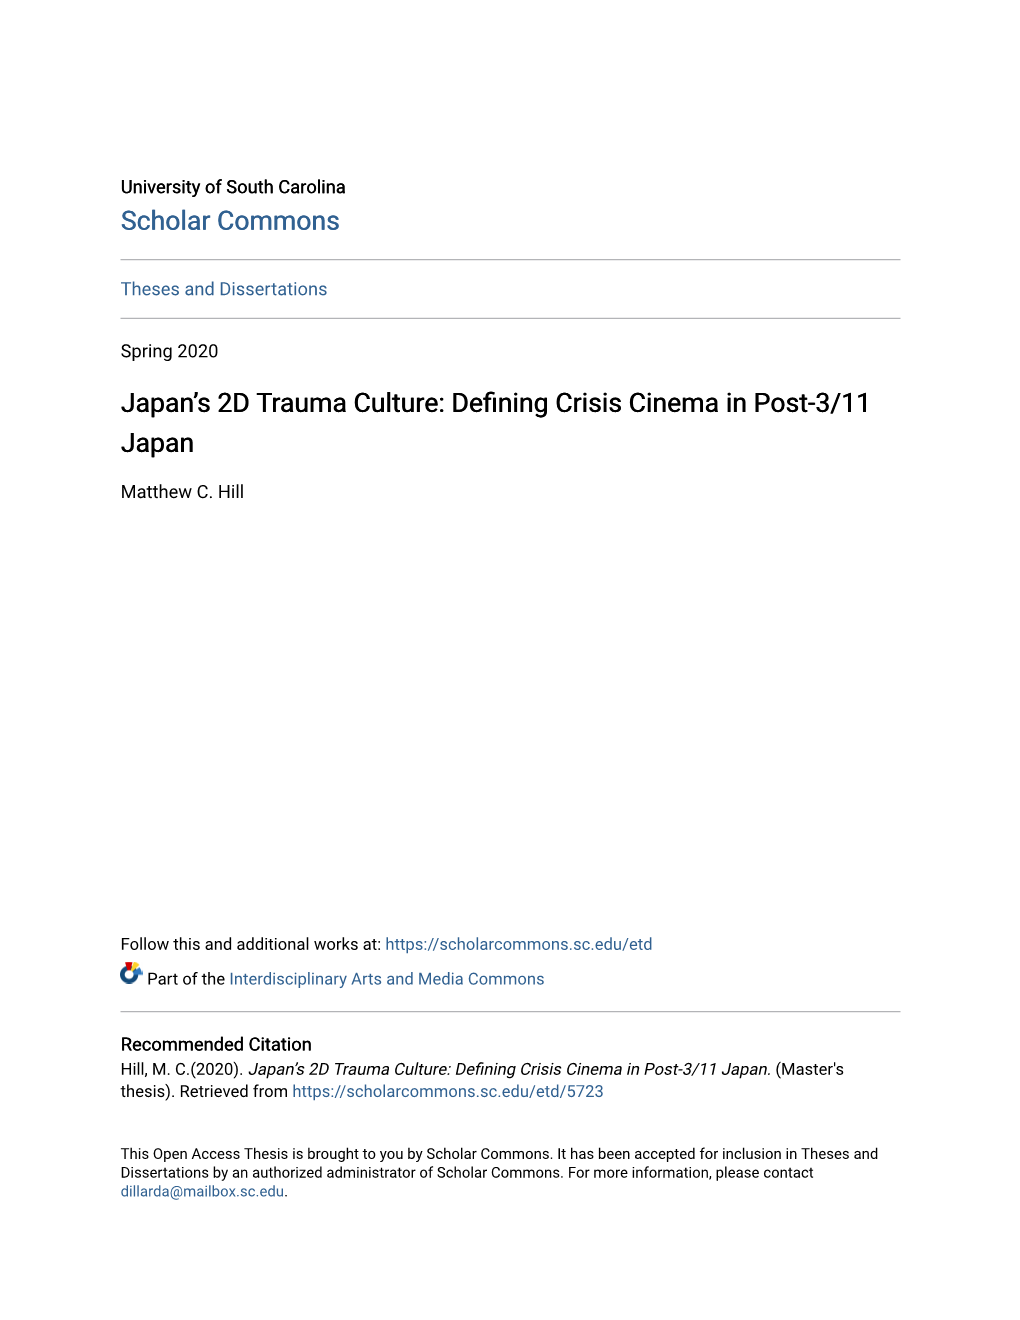 Japan's 2D Trauma Culture: Defining Crisis Cinema in Post-3/11 Japan